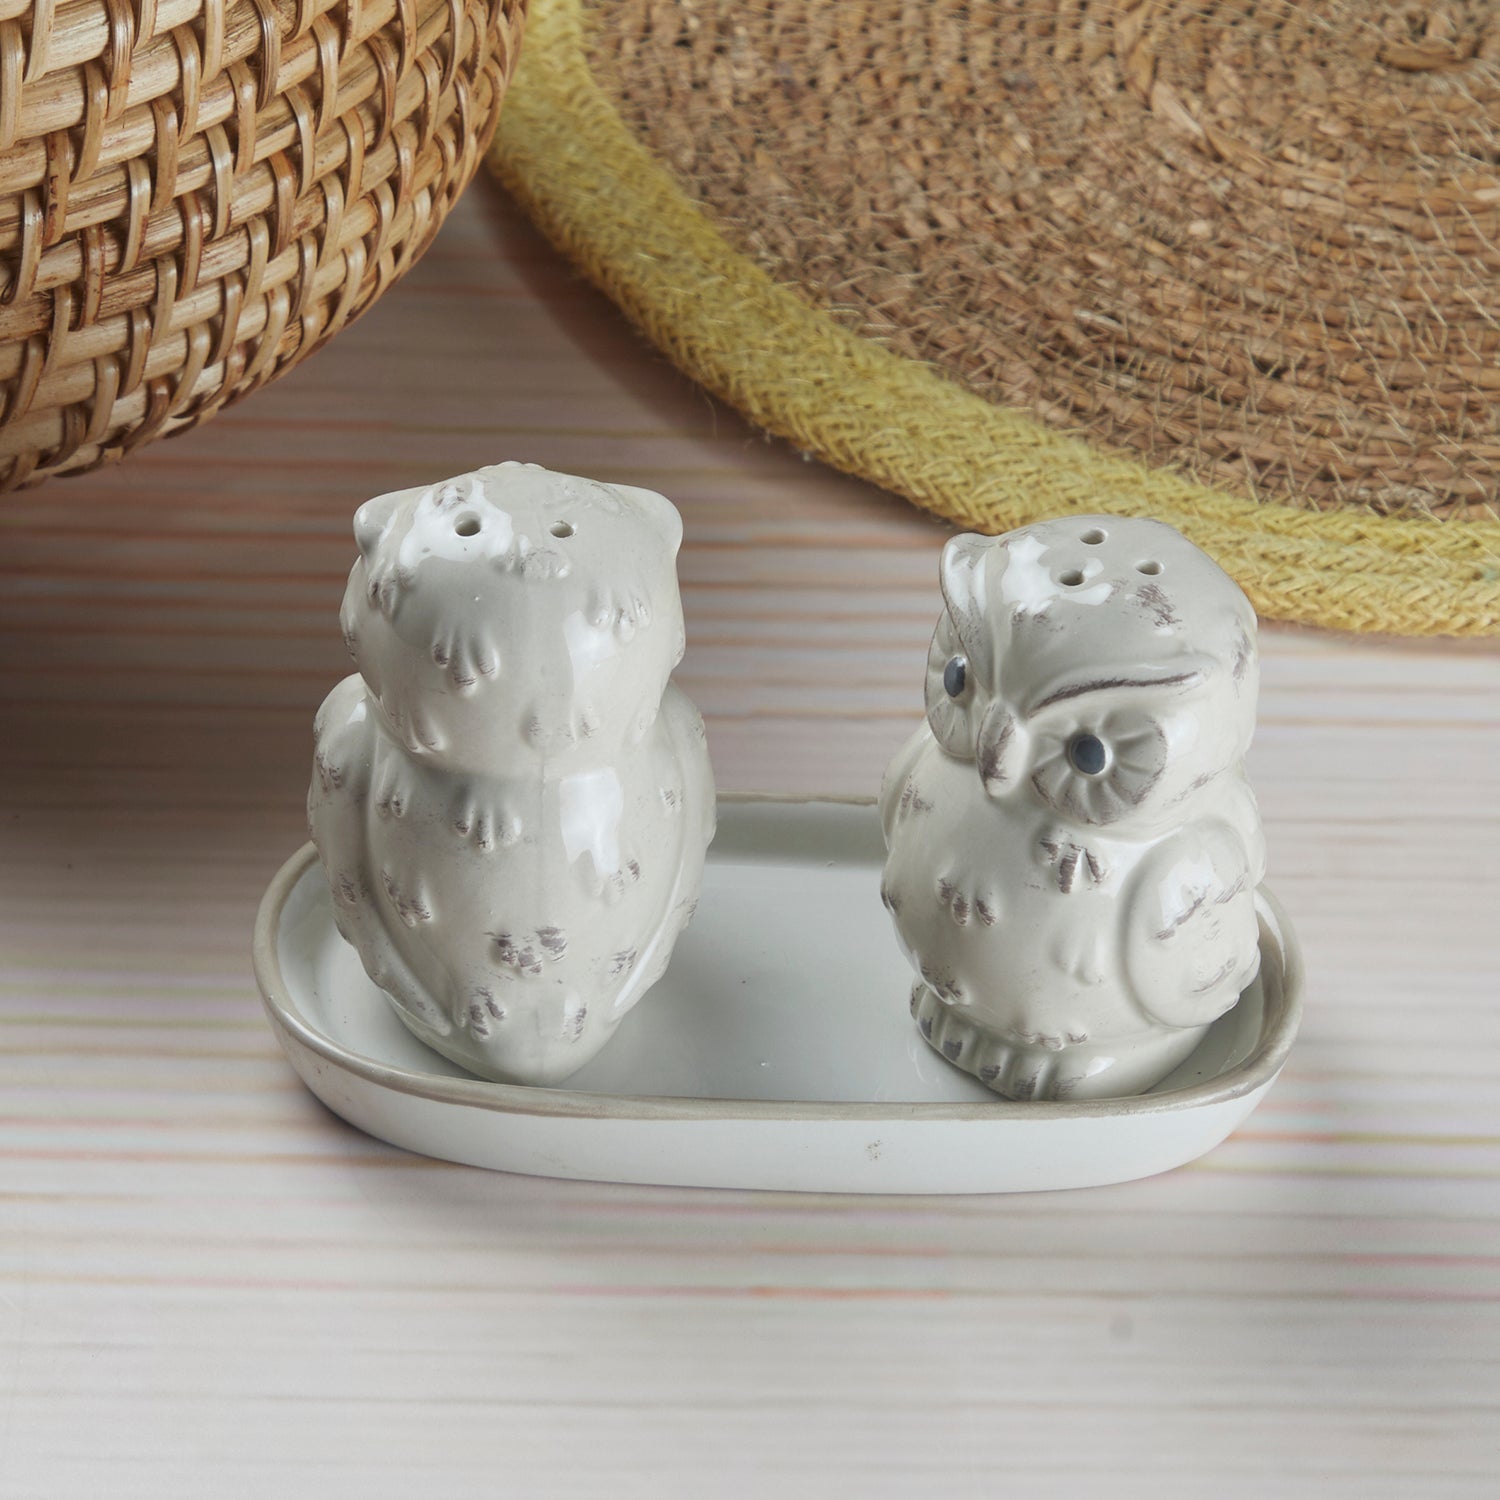 Ceramic Salt and Pepper Set with tray, Owl Design, Light Brown